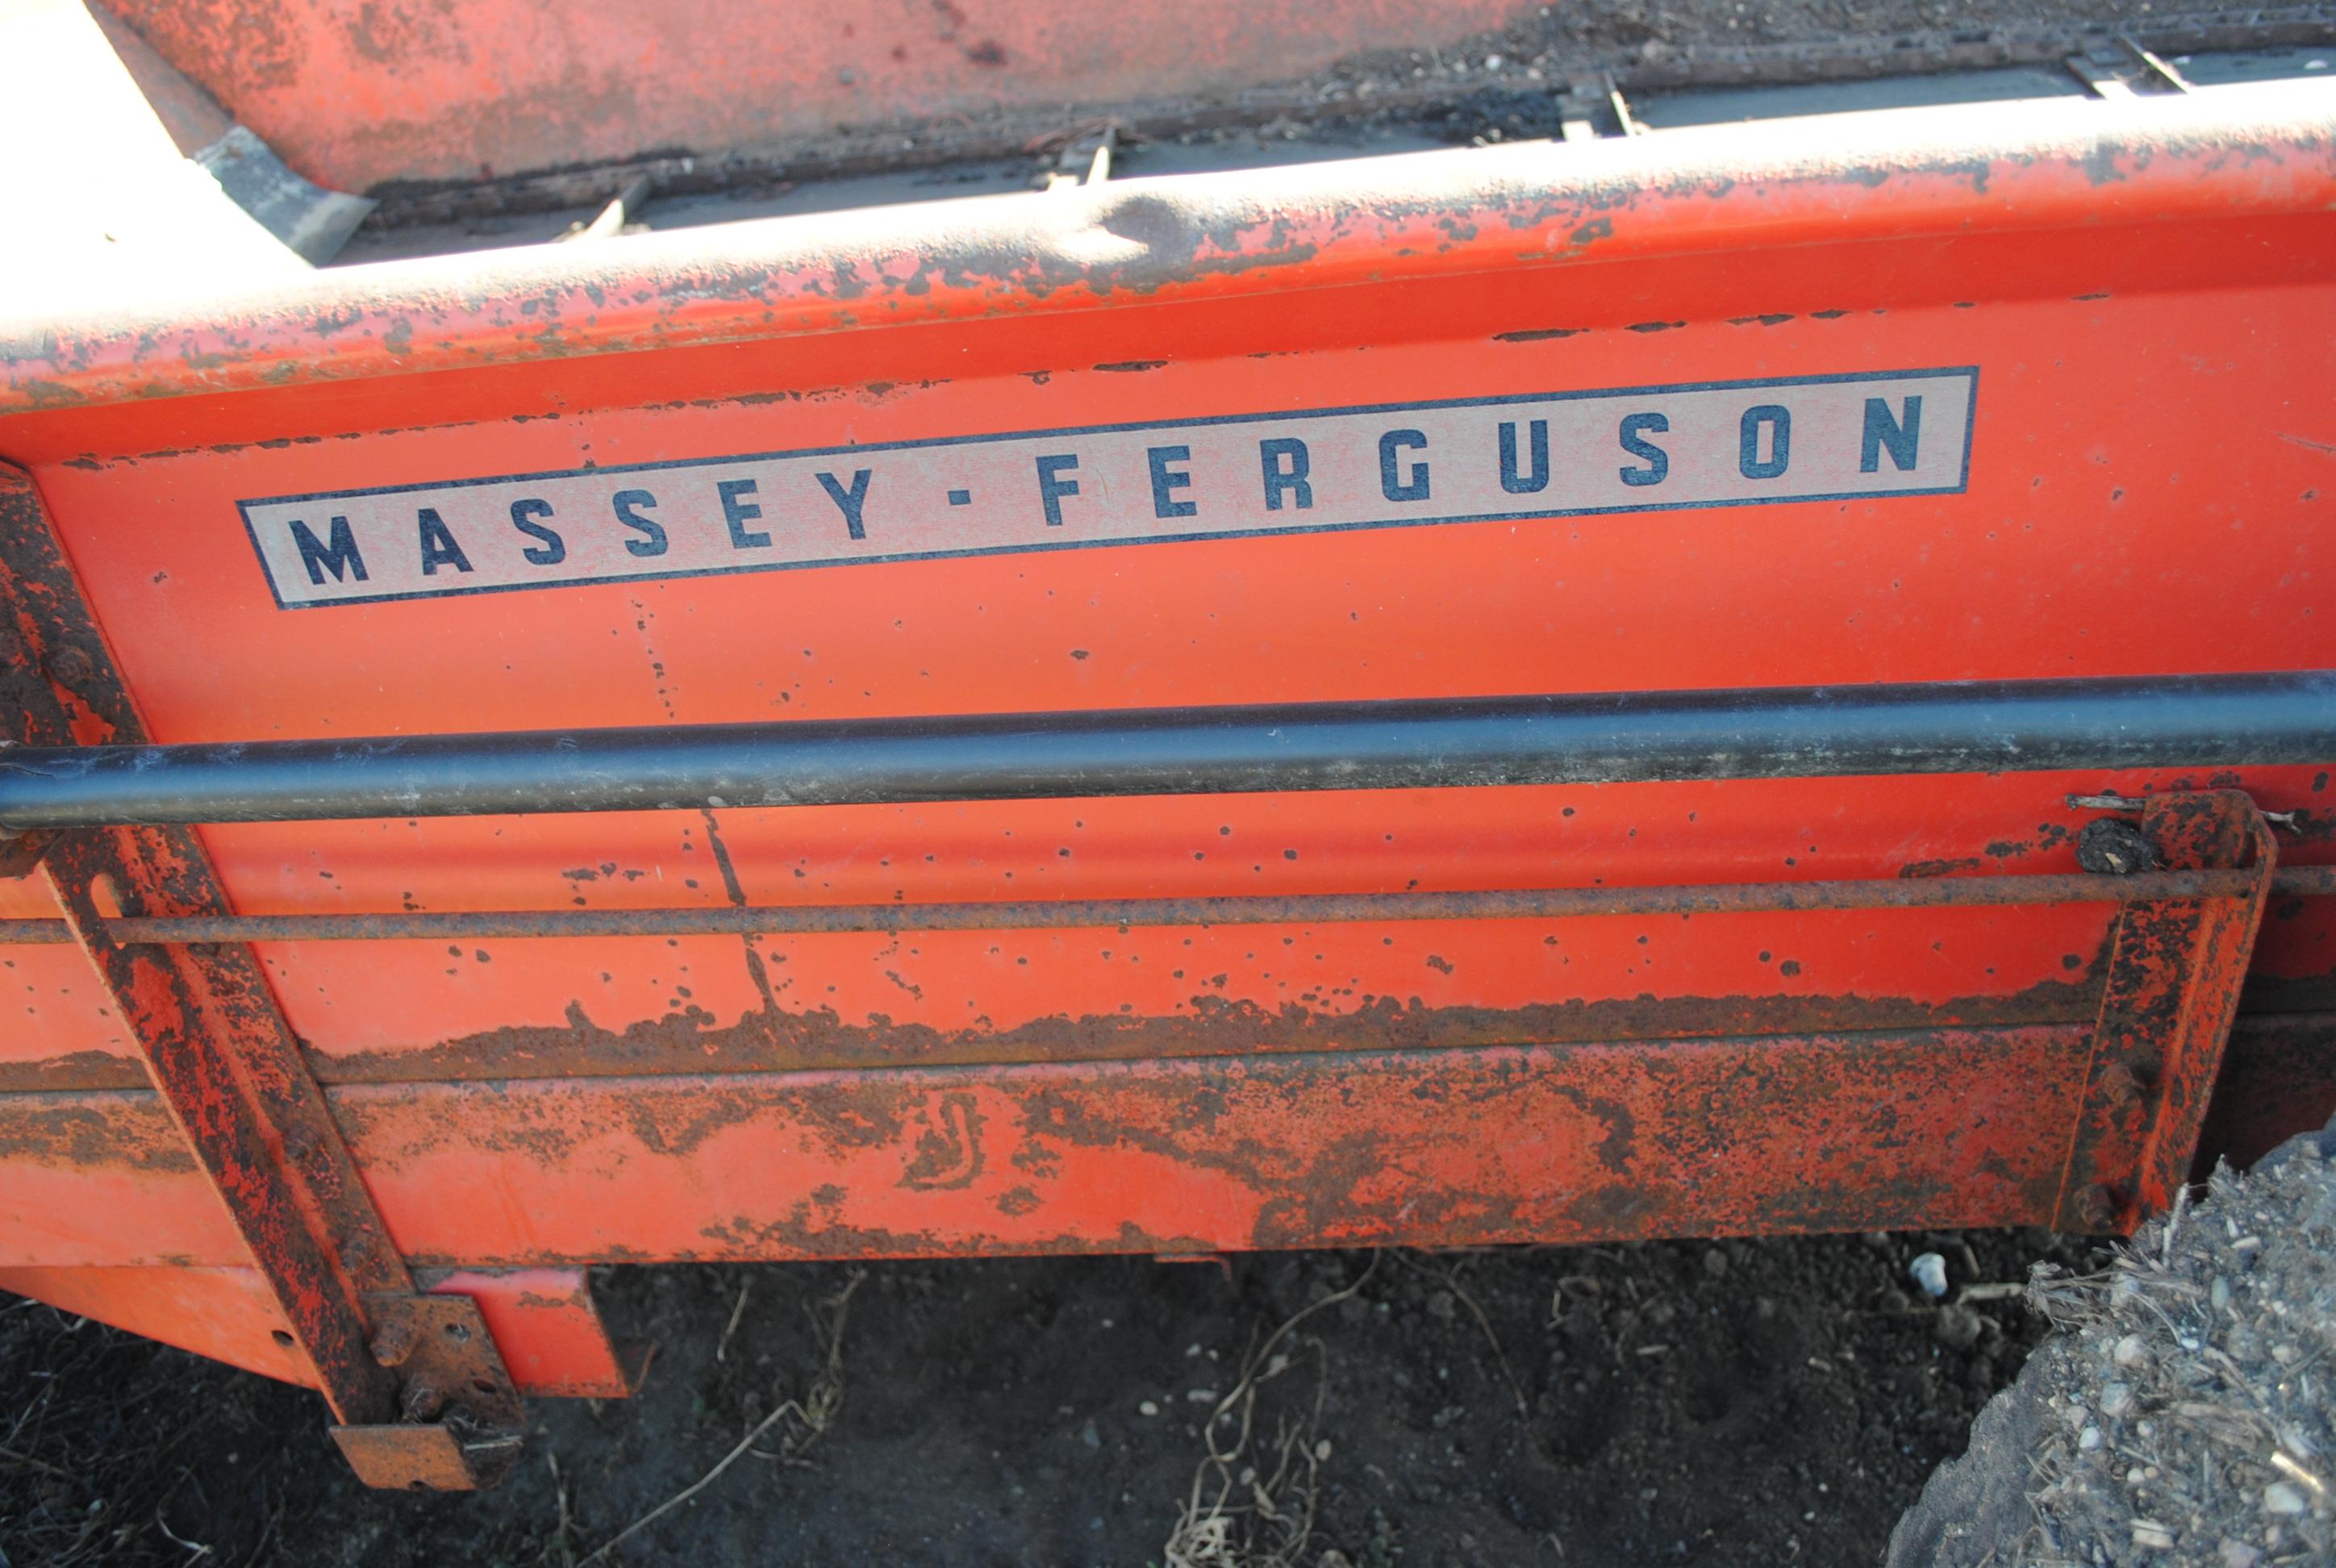 Massey Ferguson 110 Manure Spreader, single axle, single beater, pto, was used last fall